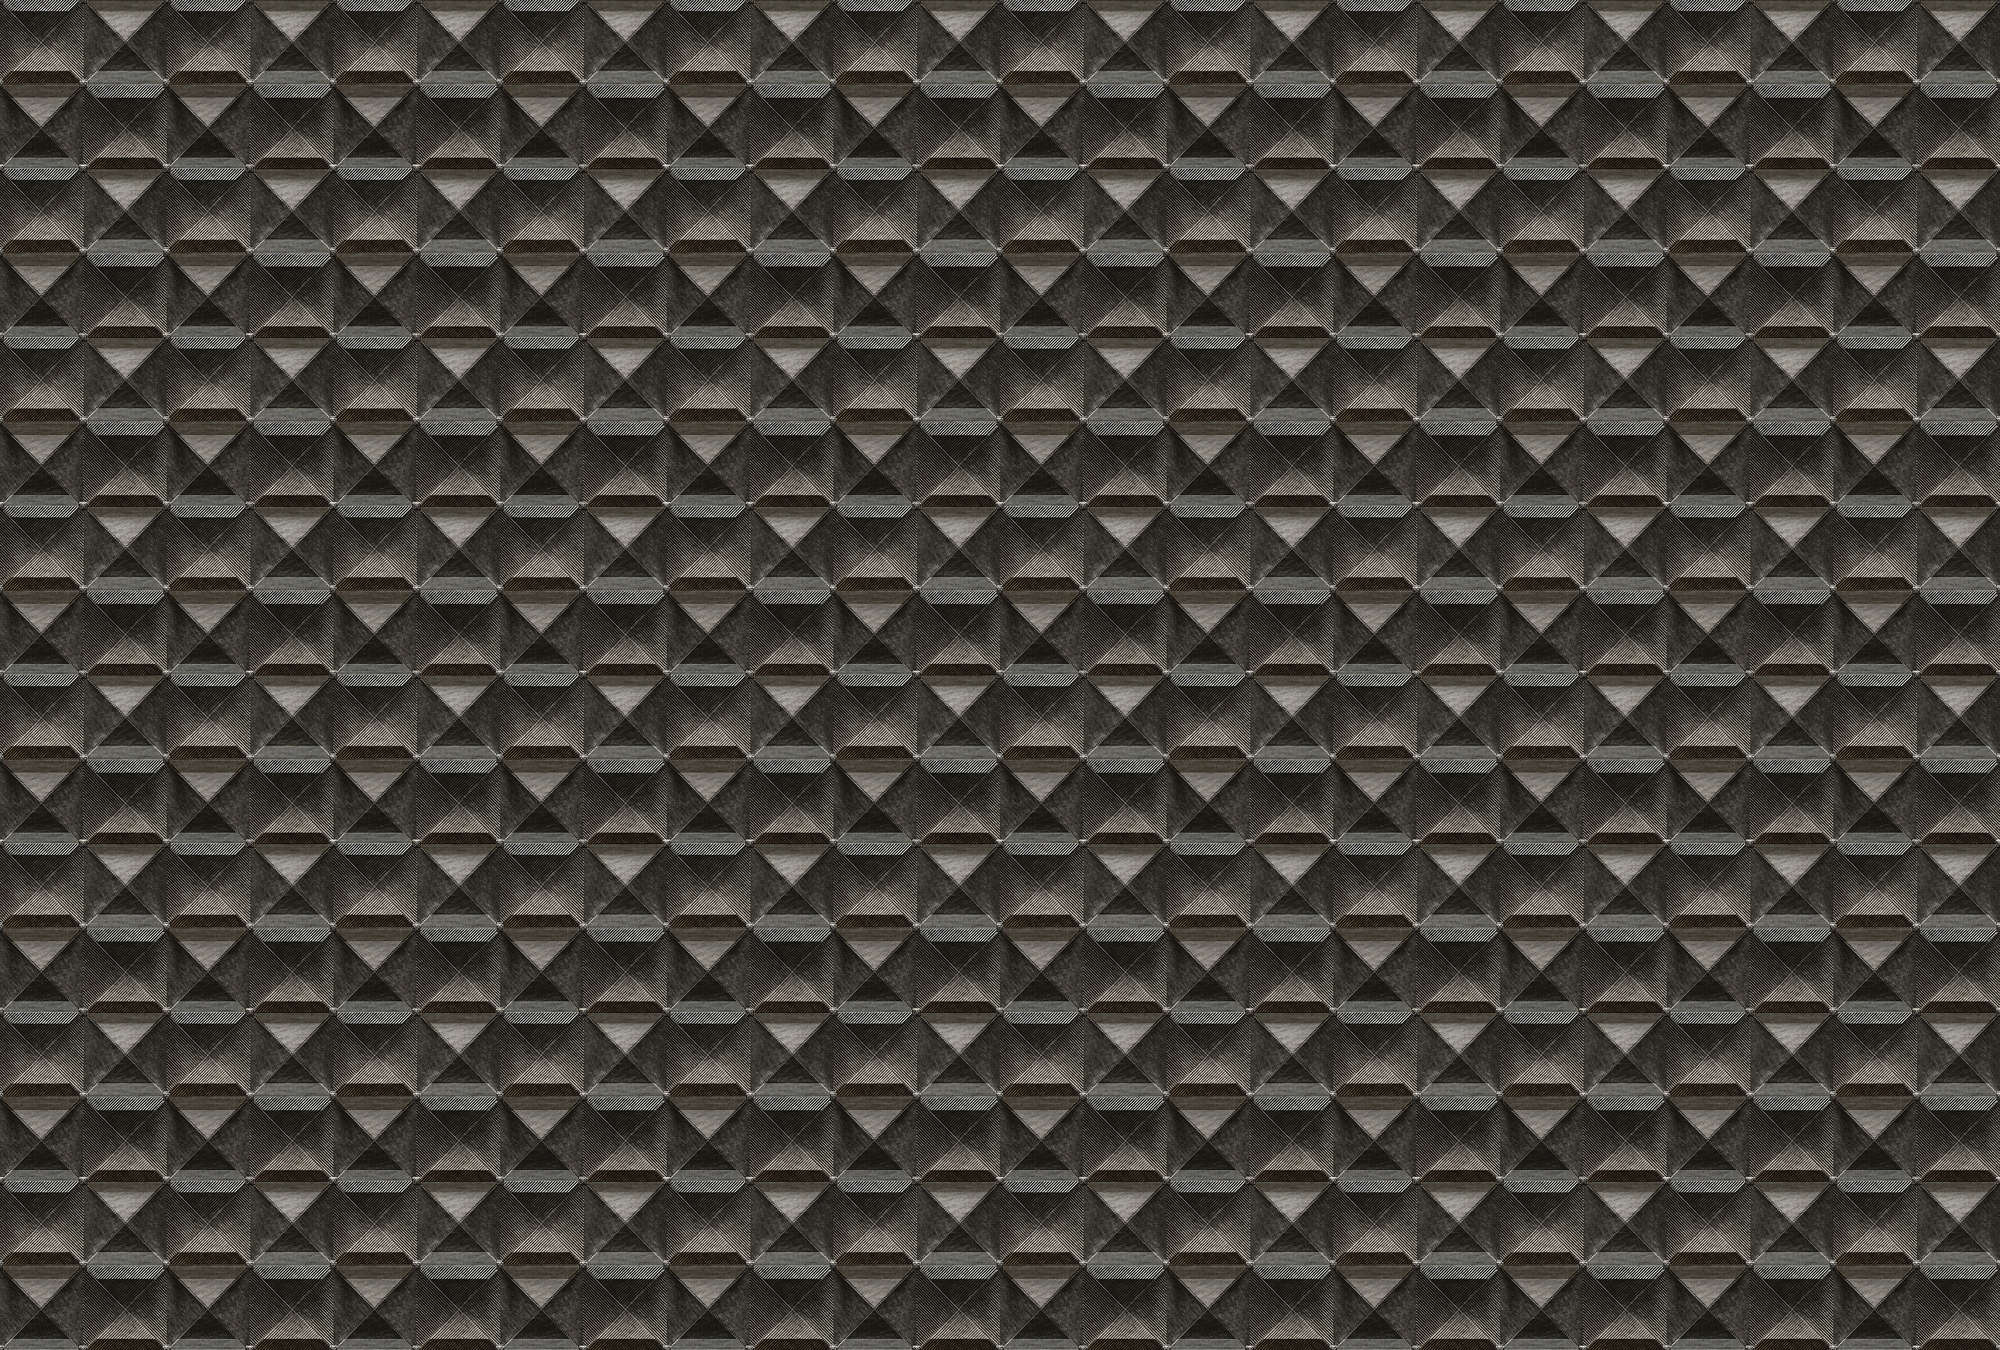             The edge 1 - 3D Photo wallpaper with lozenge metal design - Brown, Black | Premium smooth fleece
        